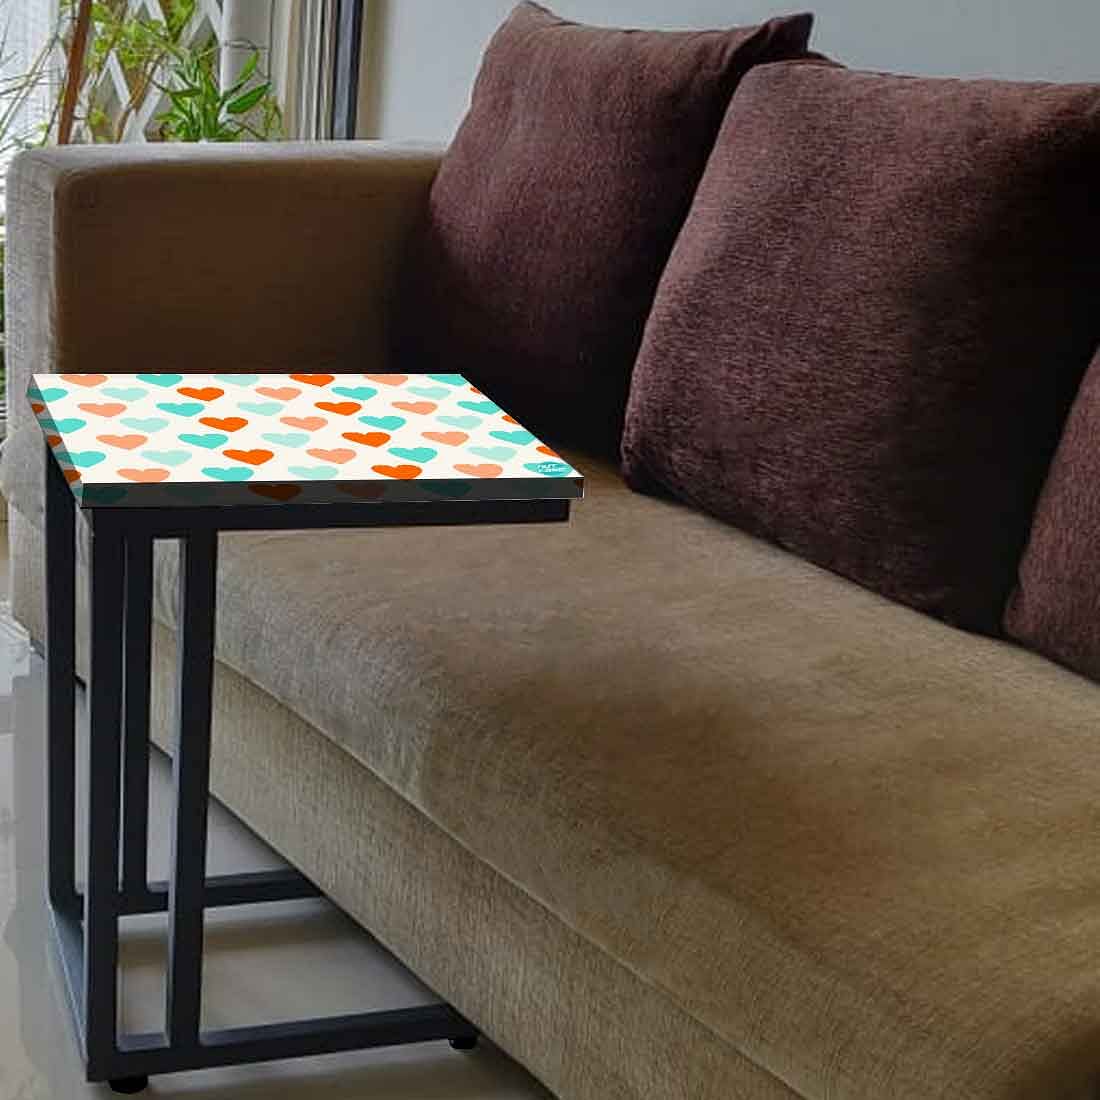 Designer Sofa Side Table - Colorful Heart Nutcase